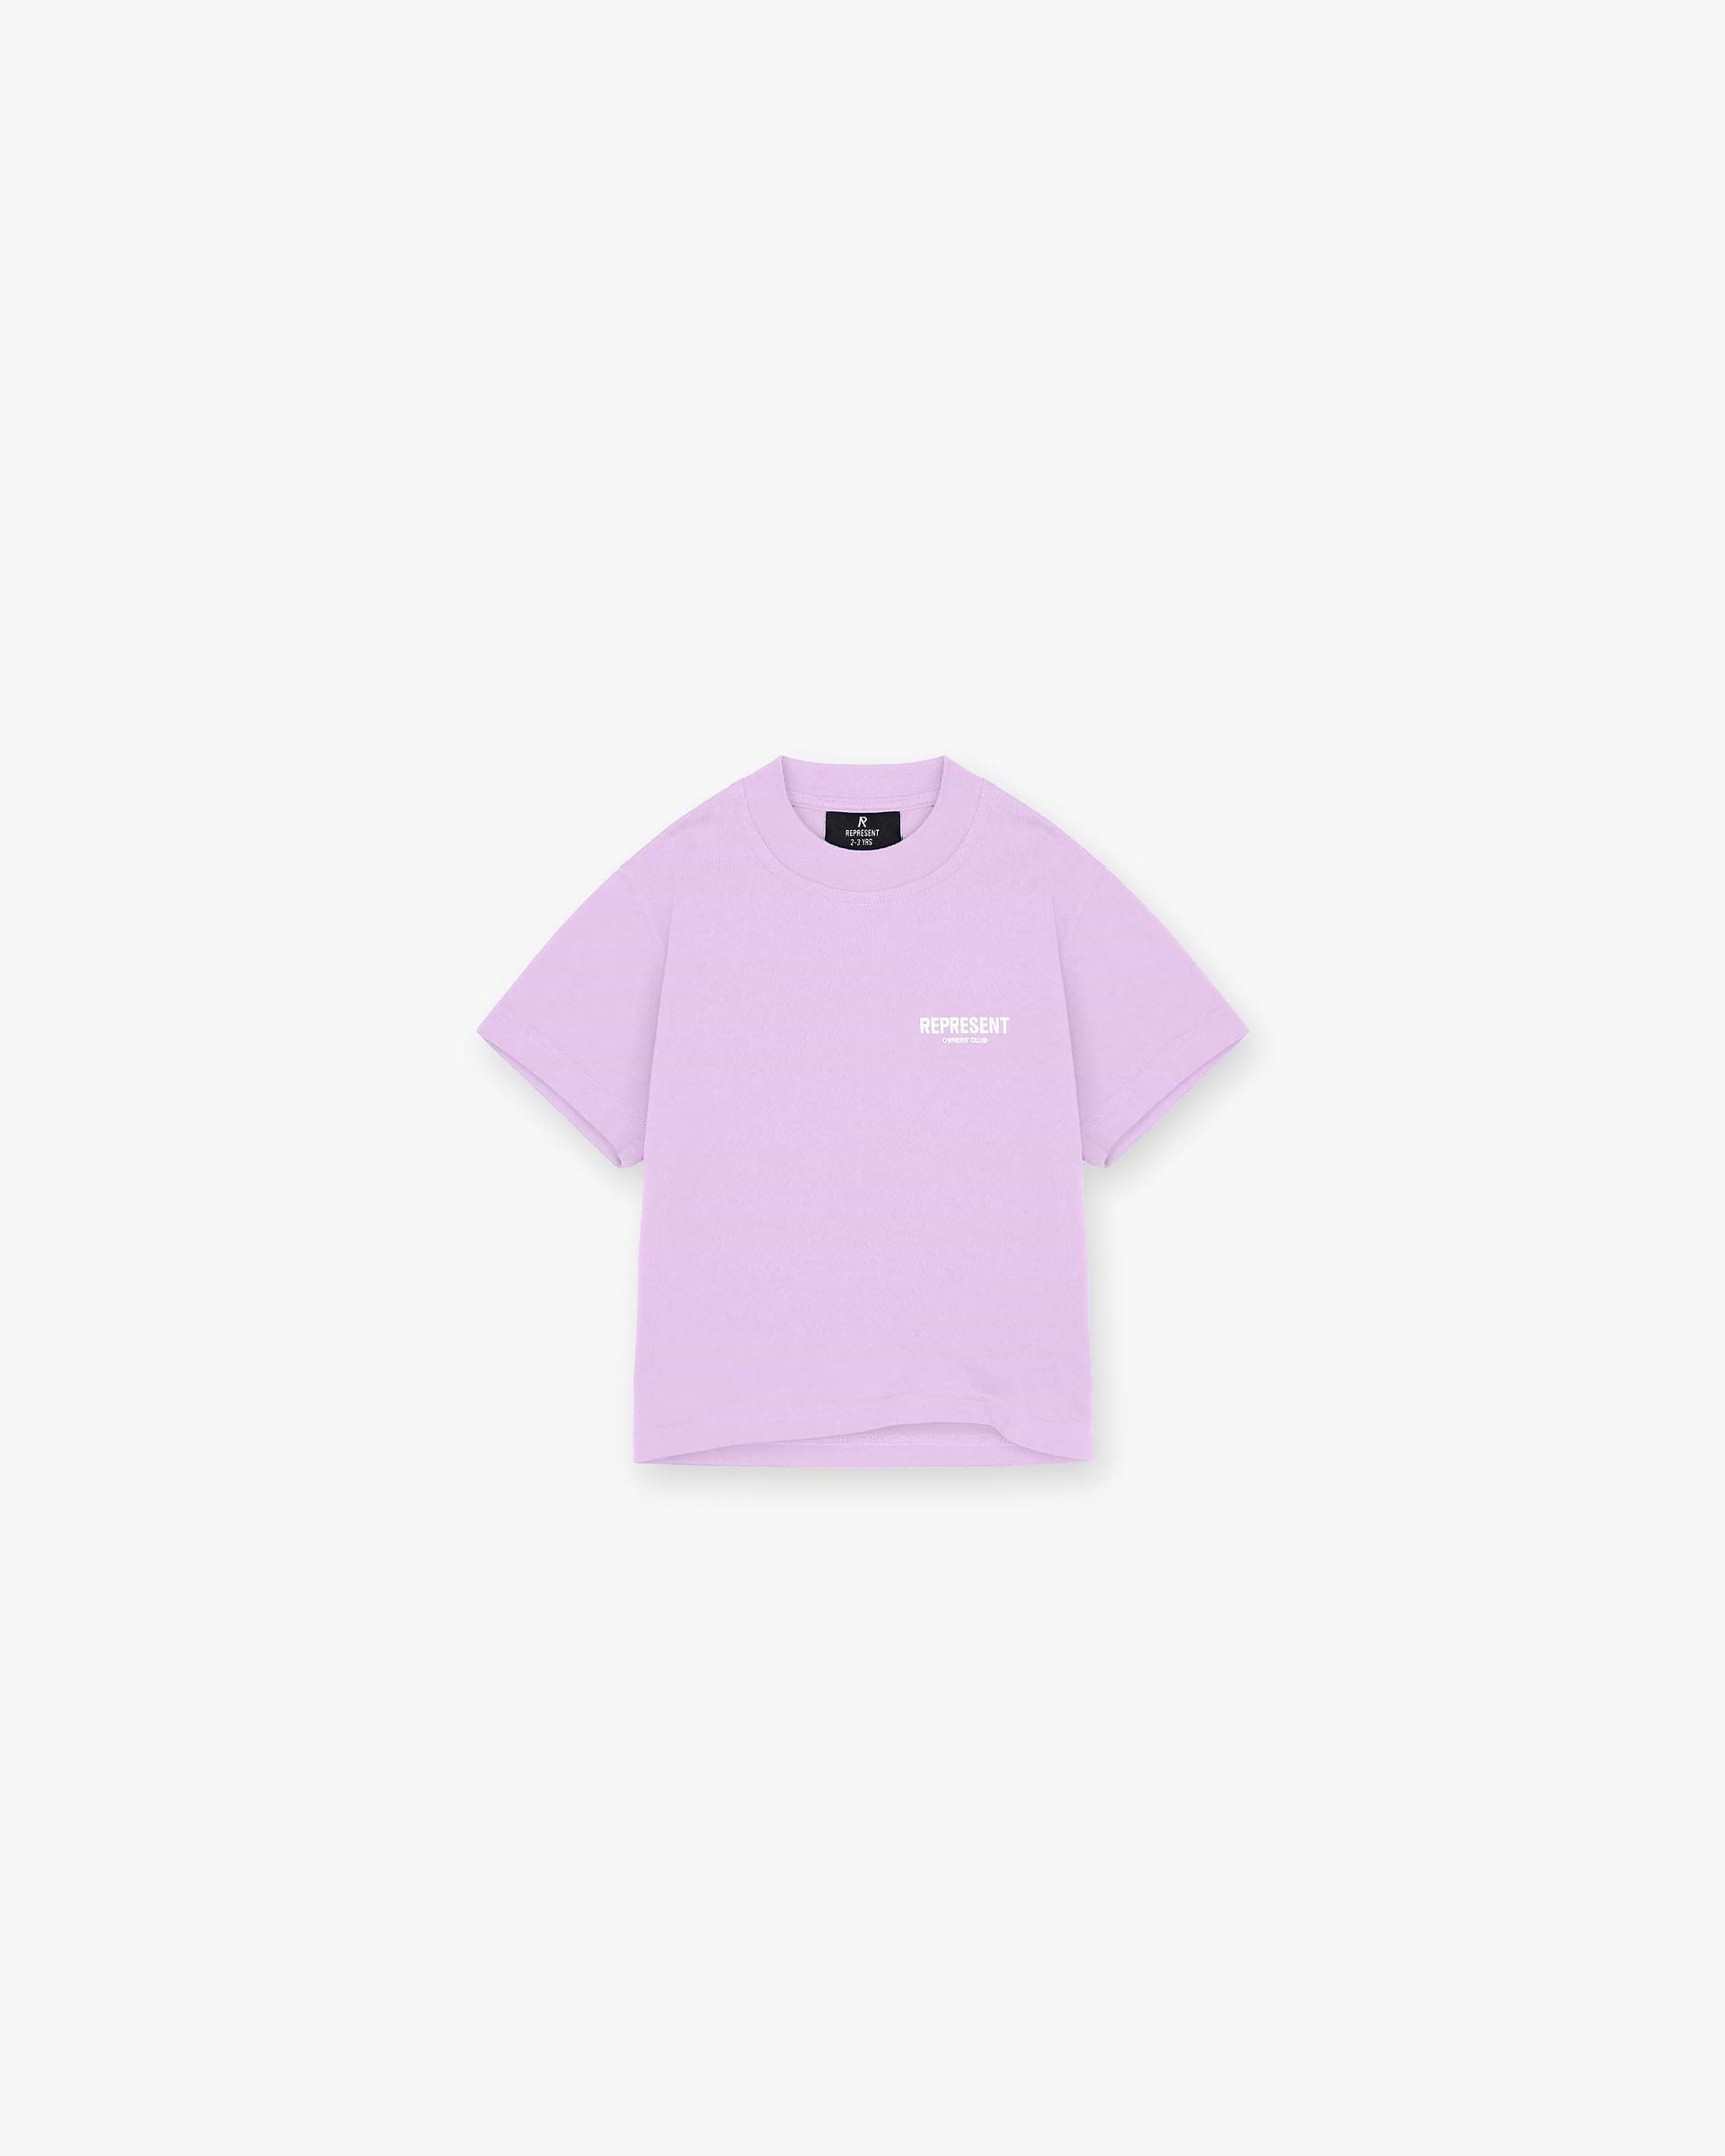 Represent Mini Owners Club T-Shirt | Lilac T-Shirts Owners Club | Represent Clo